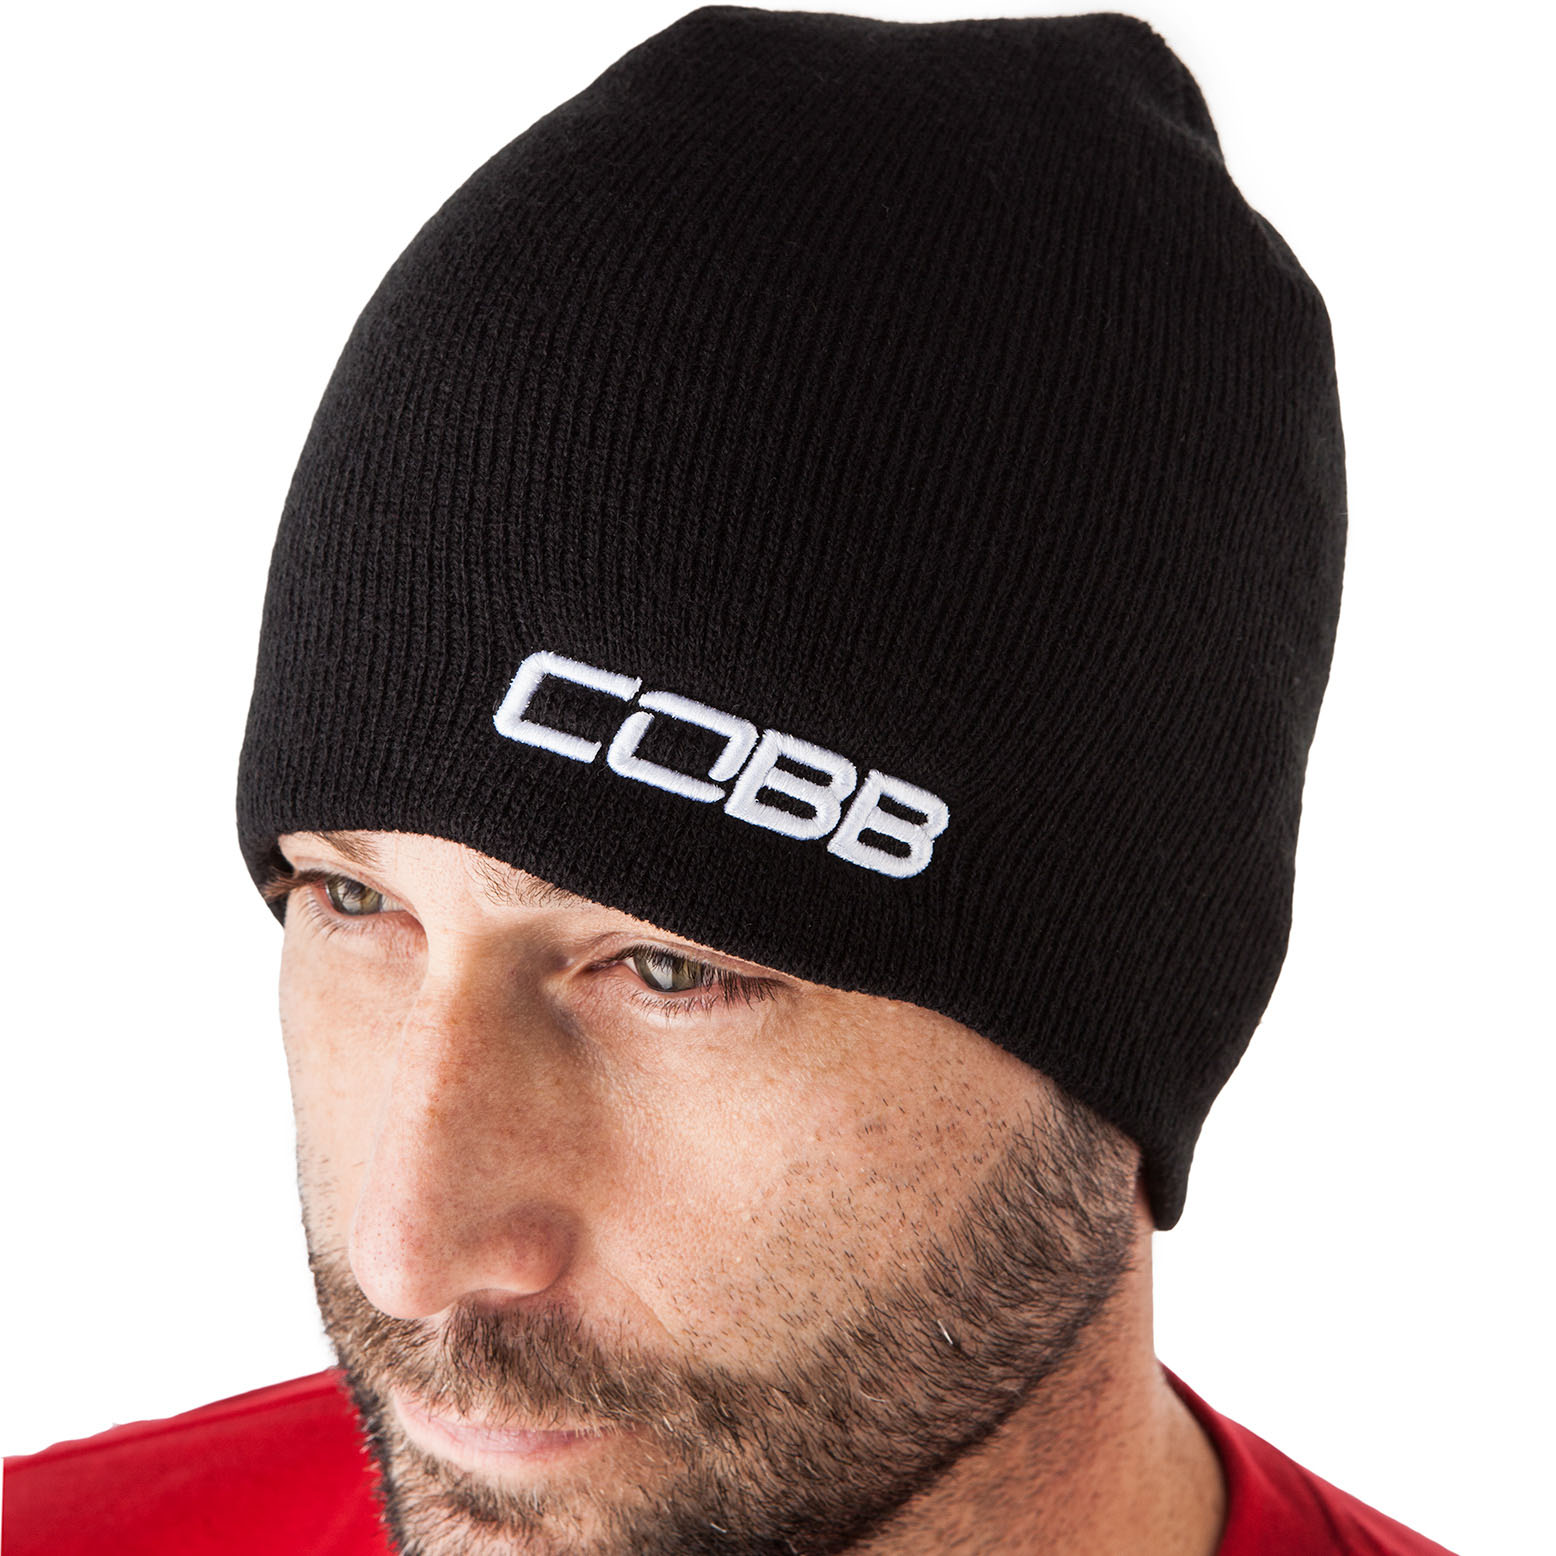 COBB Tuning Logo Beanie - Black